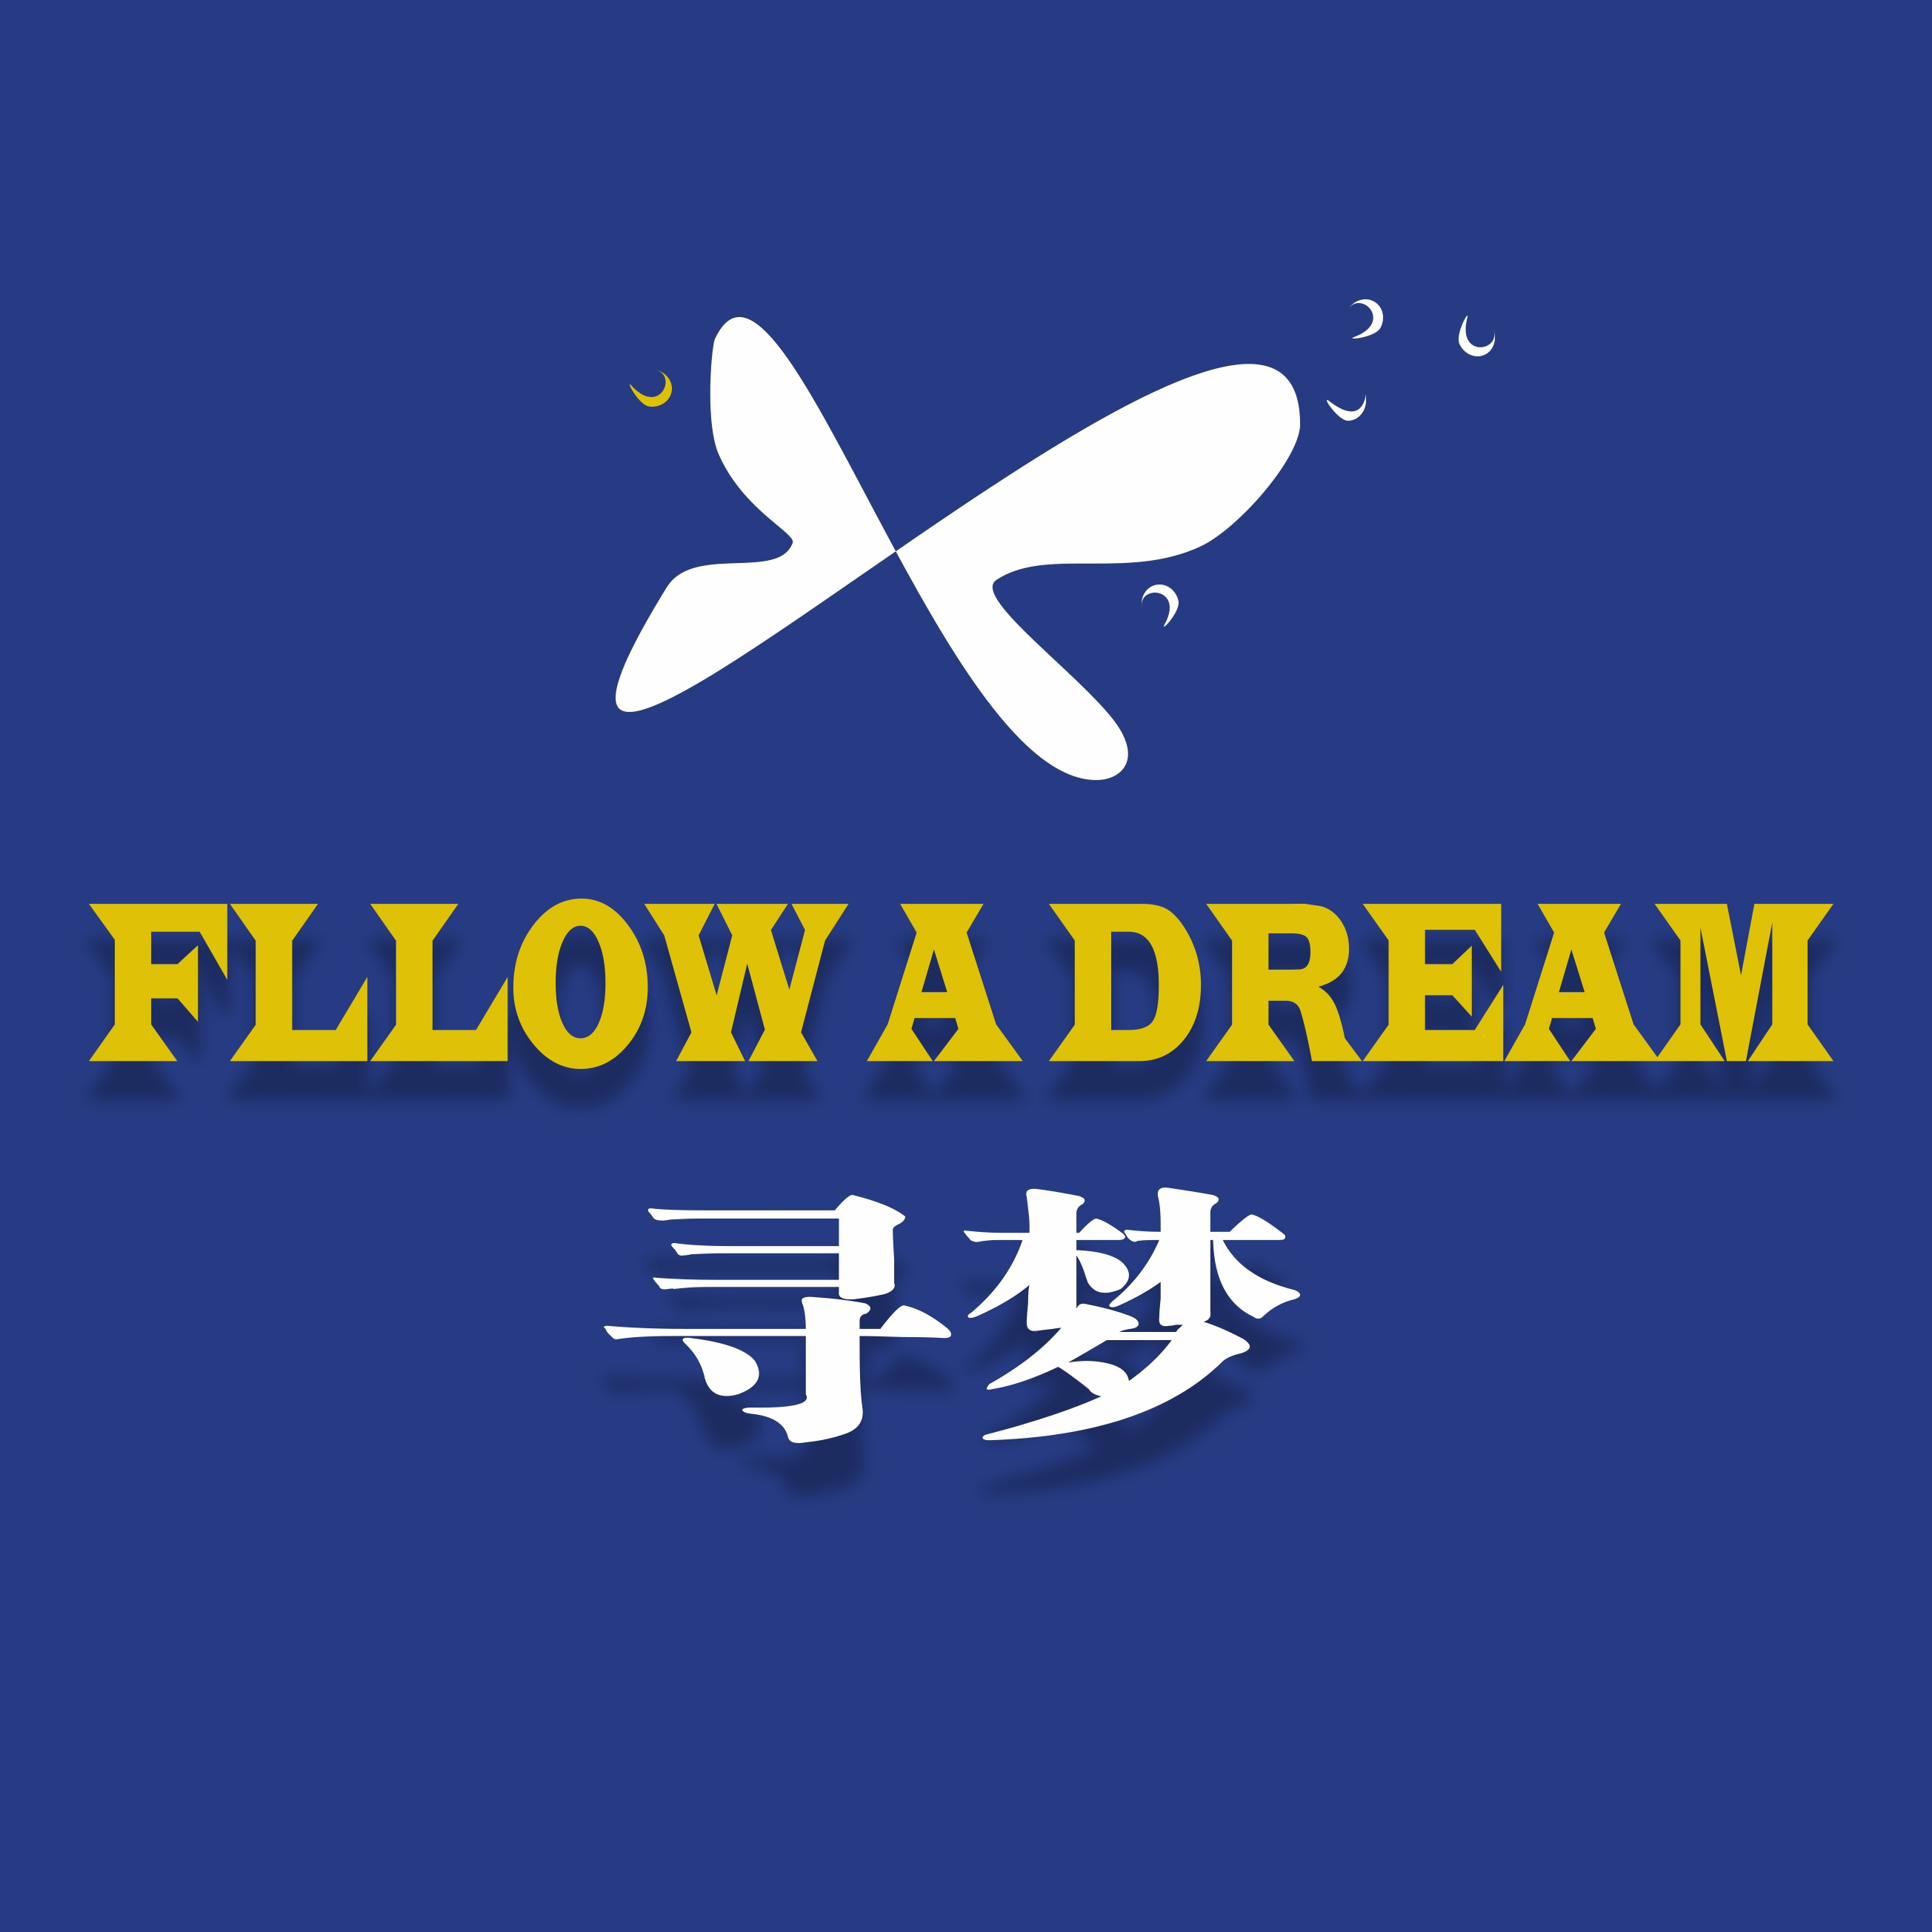 寻梦follow a dream